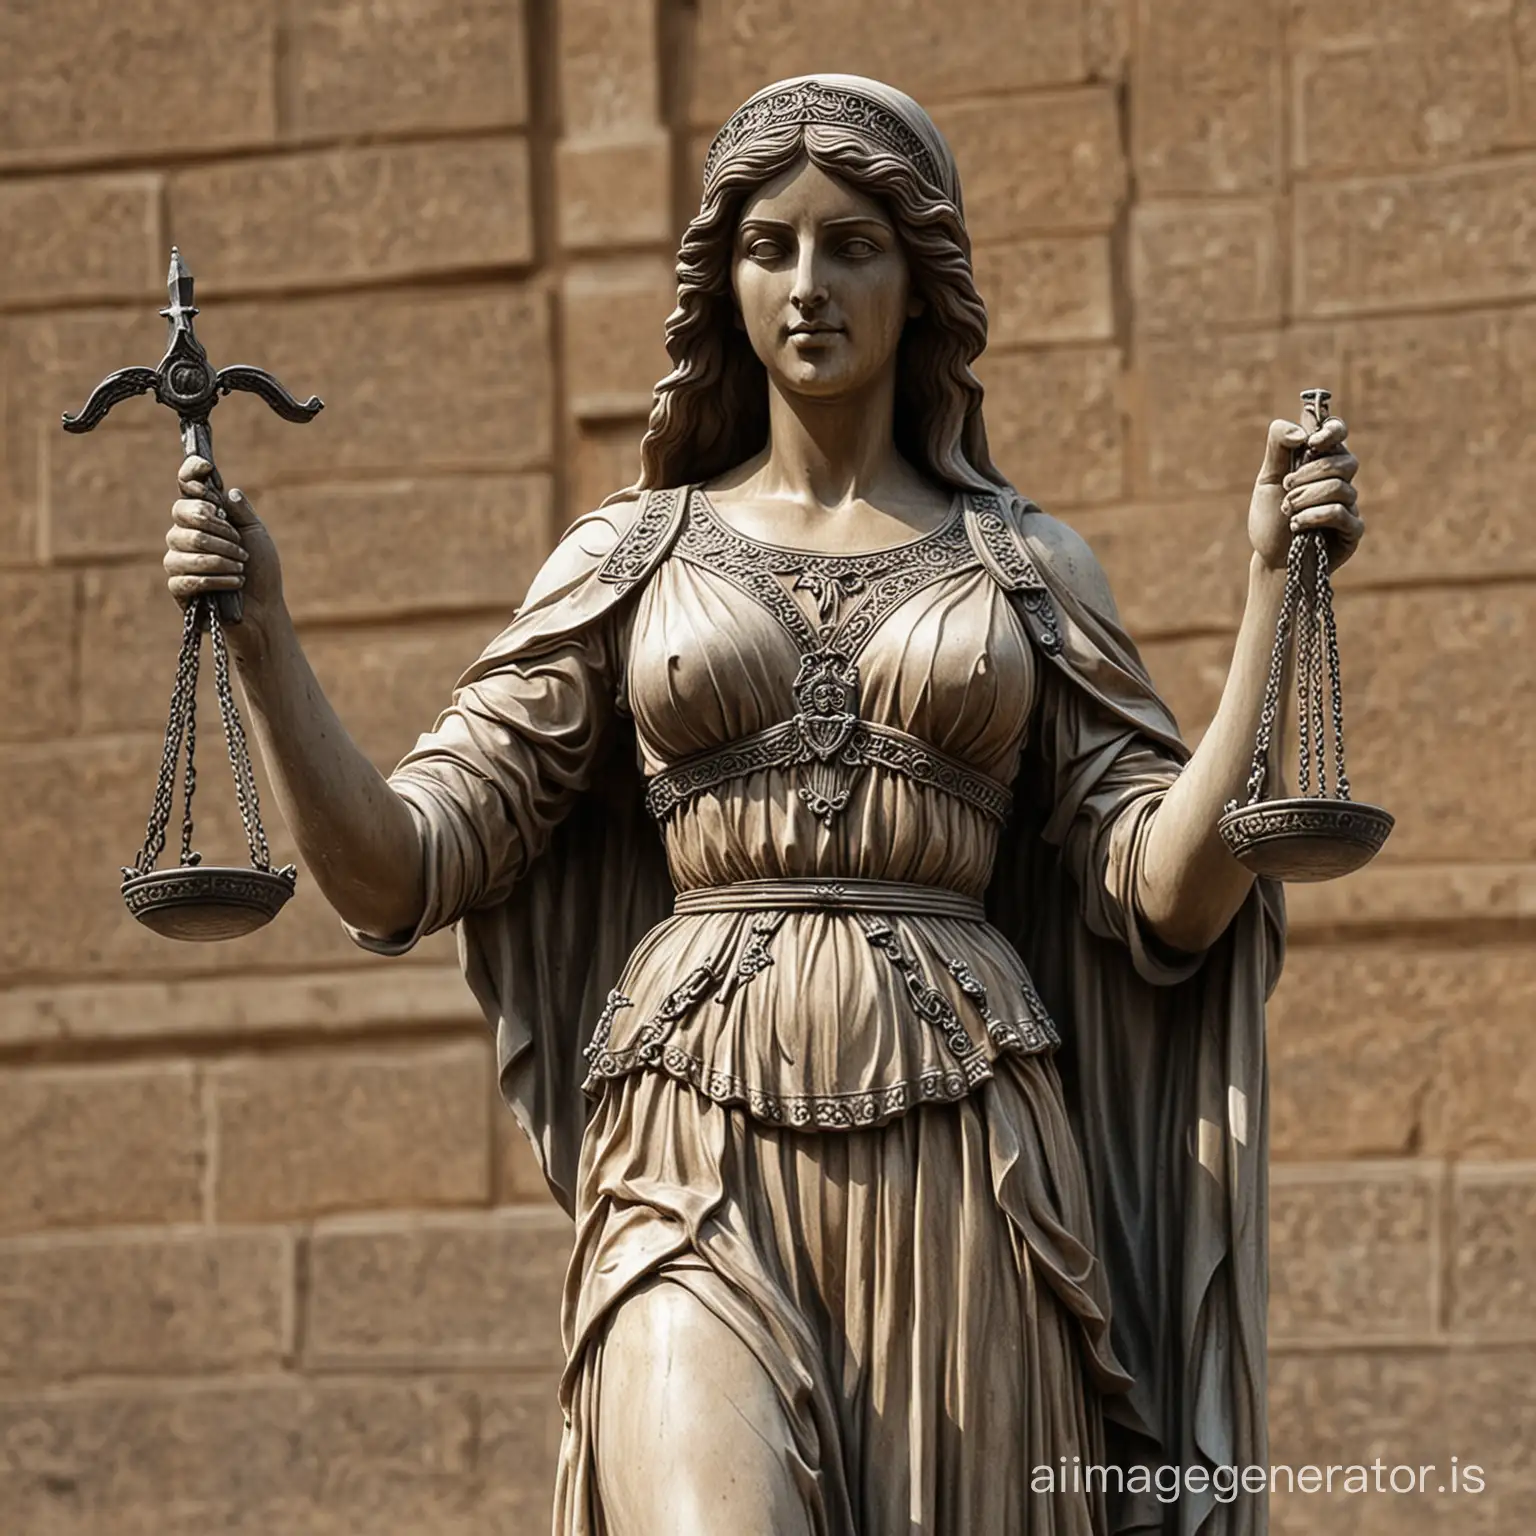 Statue justice
Persia